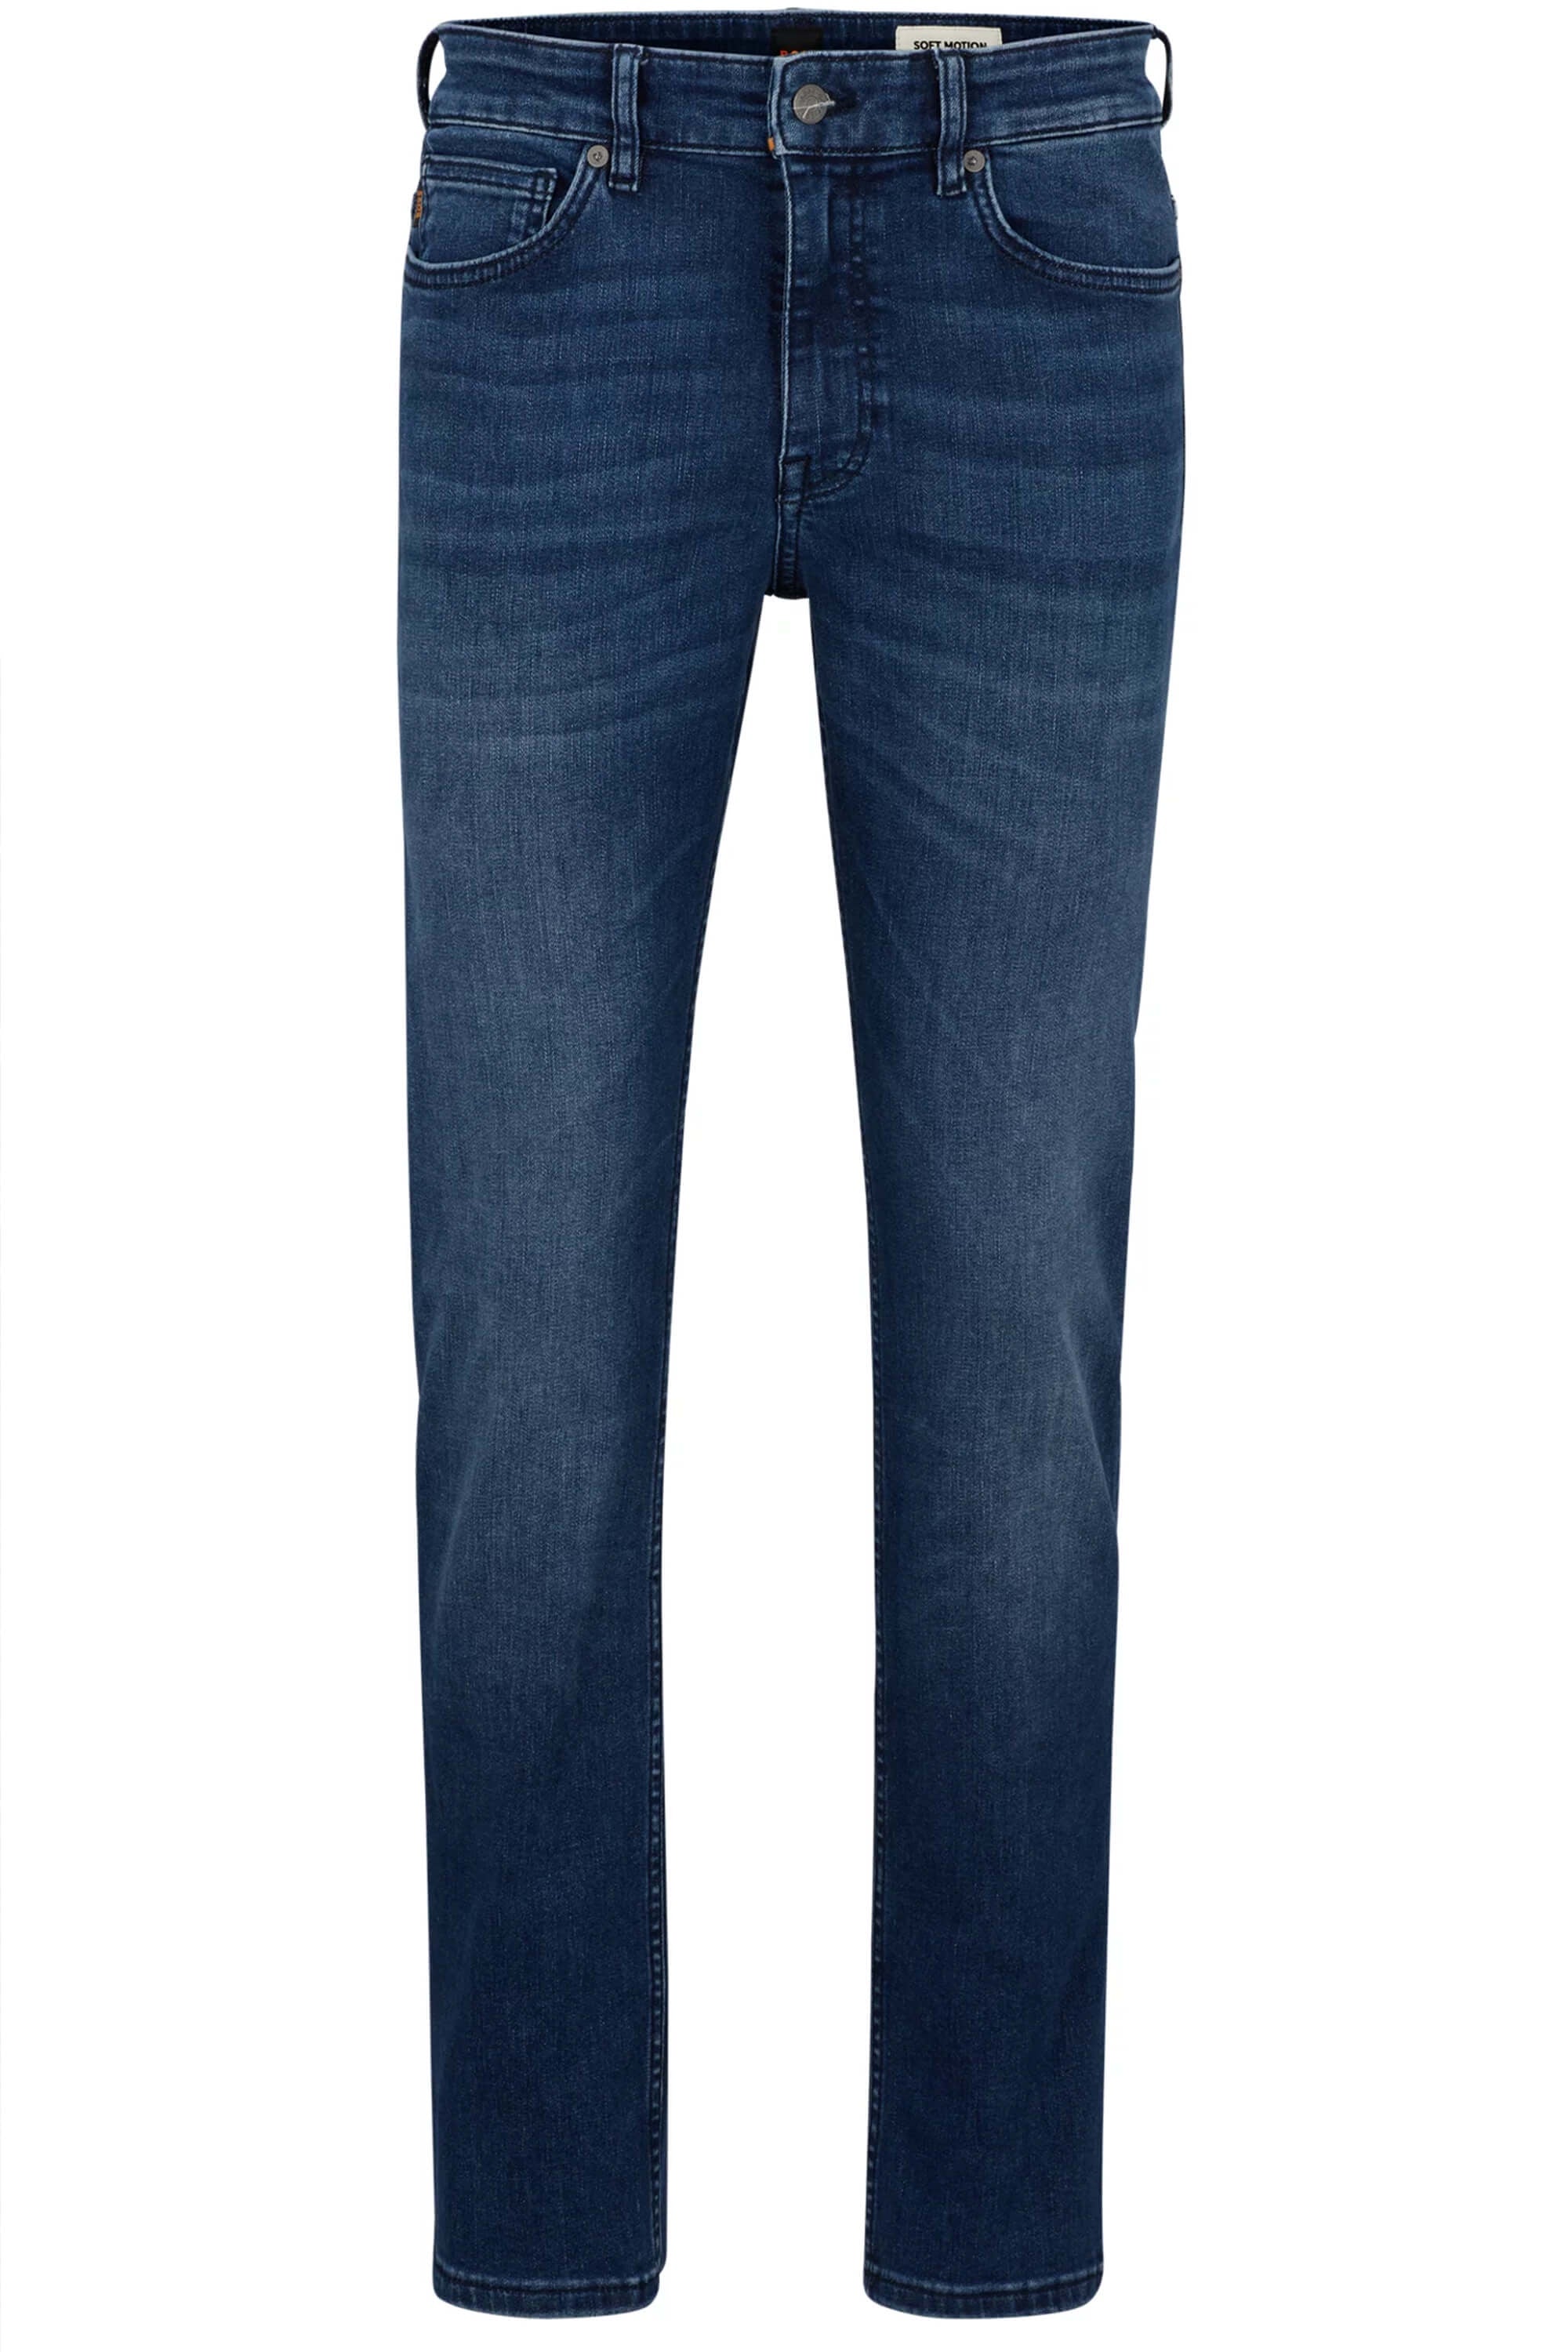 Hugo Boss Delaware S.Kind Jeans